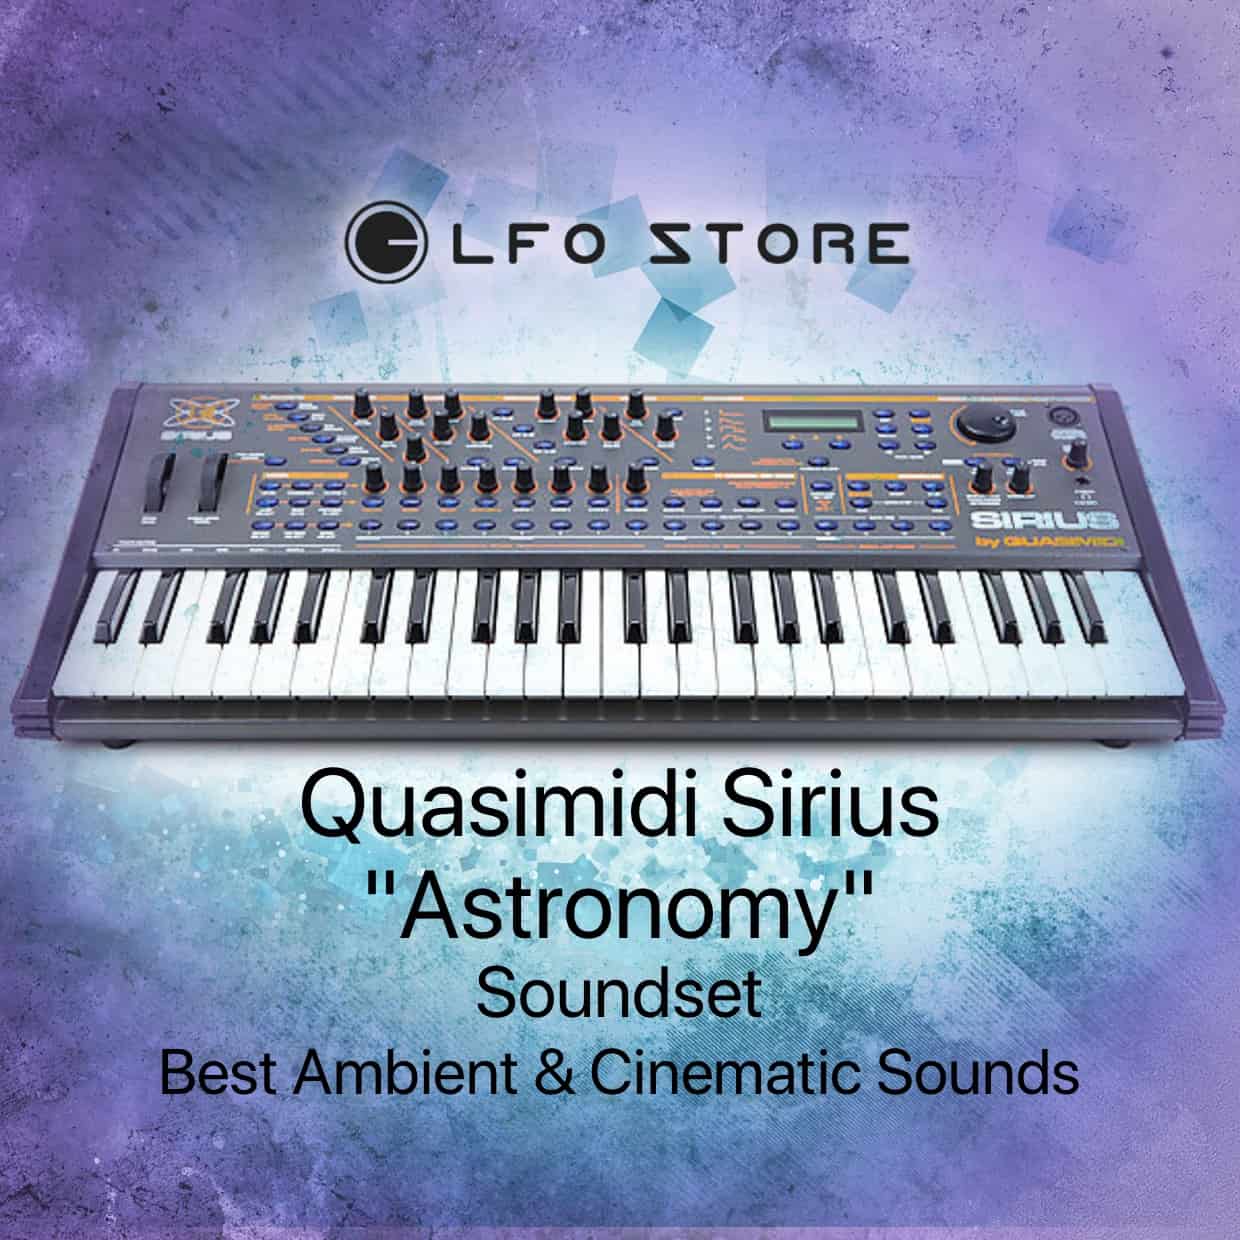 Quasimidi Sirius 22Astronomy22 Soundset Ambient Cinematic Sounds